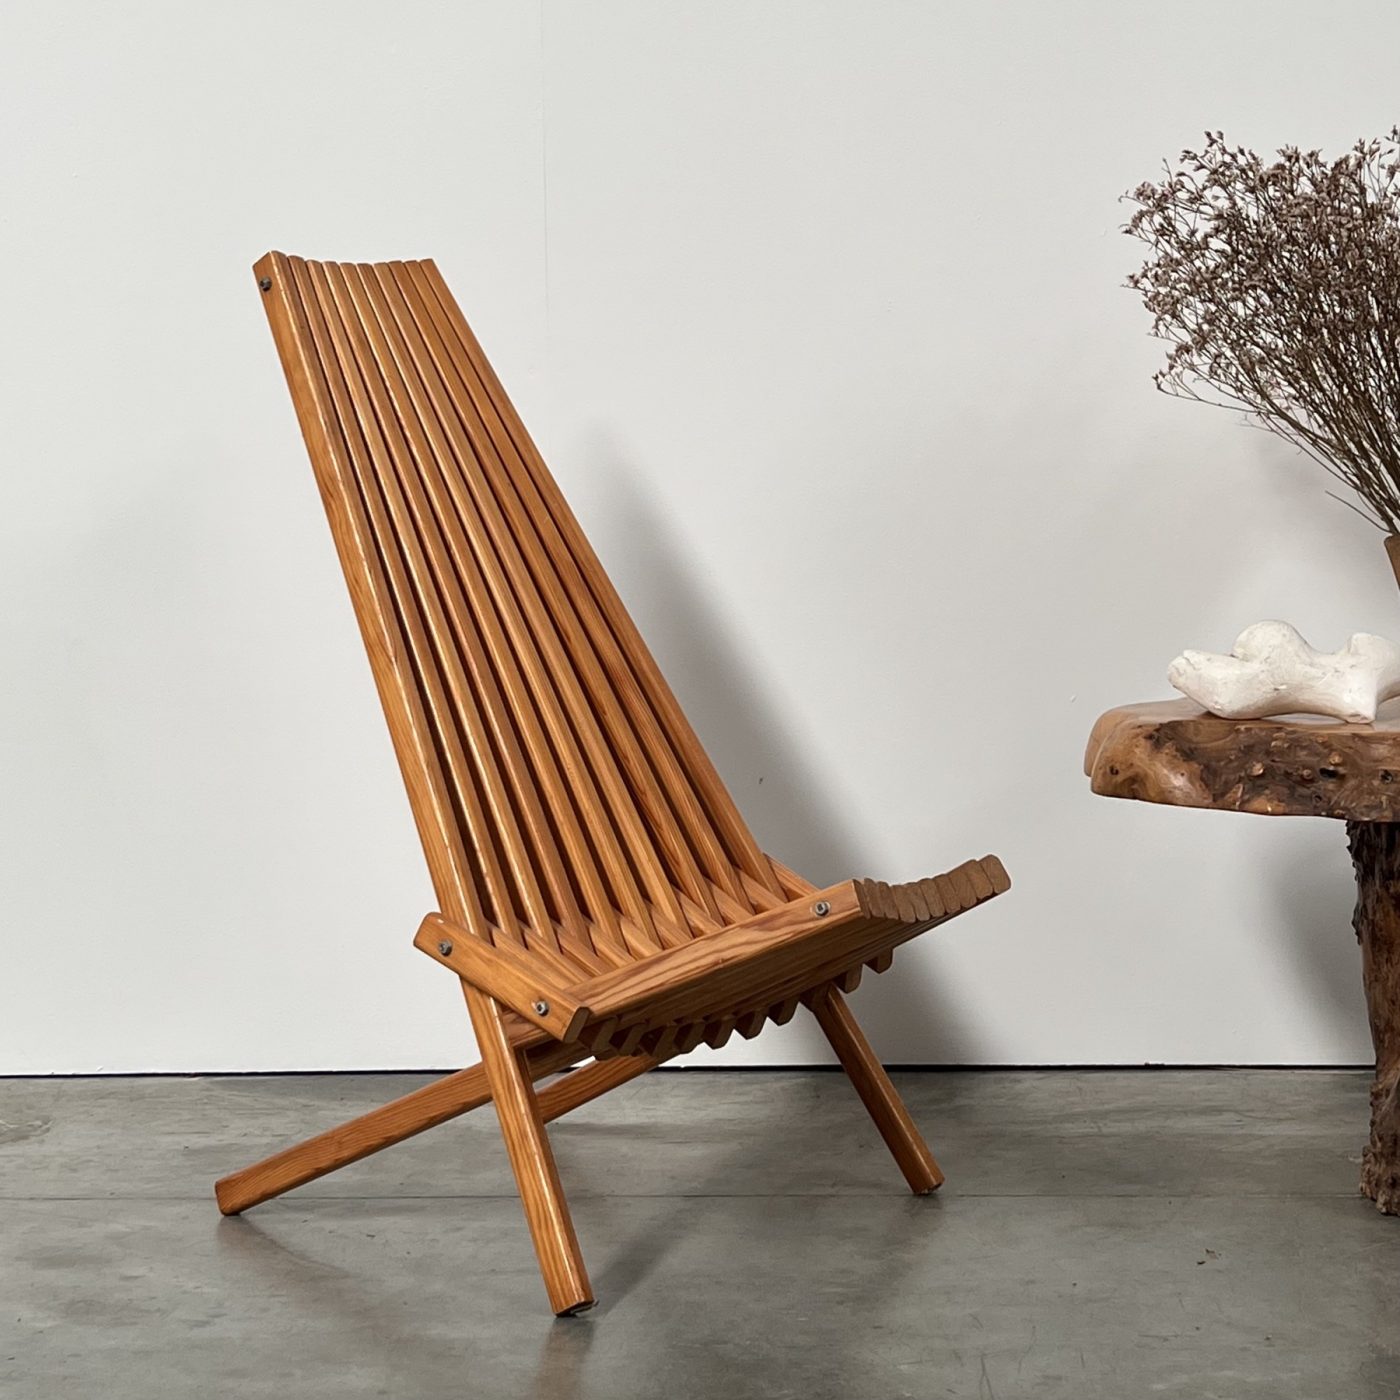 objet-vagabond-folding-chair0000